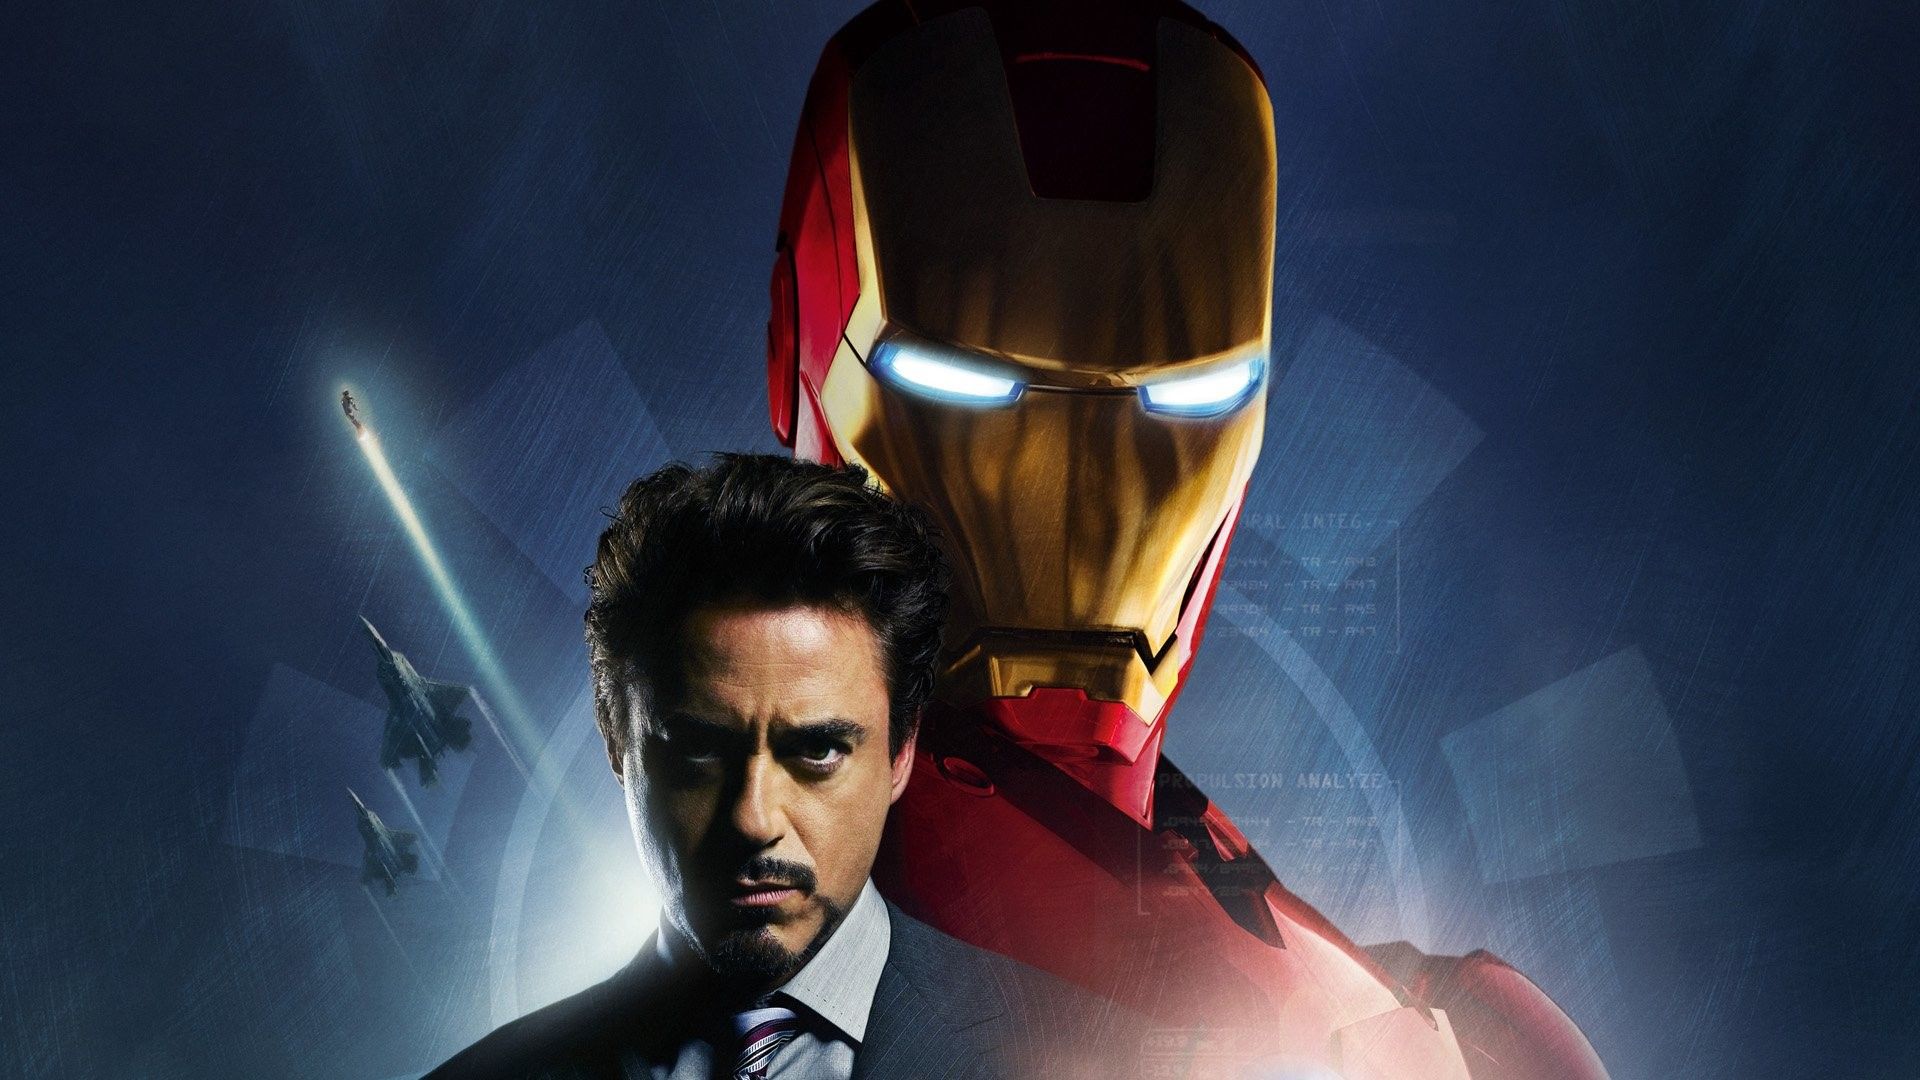 Tony Stark Wallpaper background picture